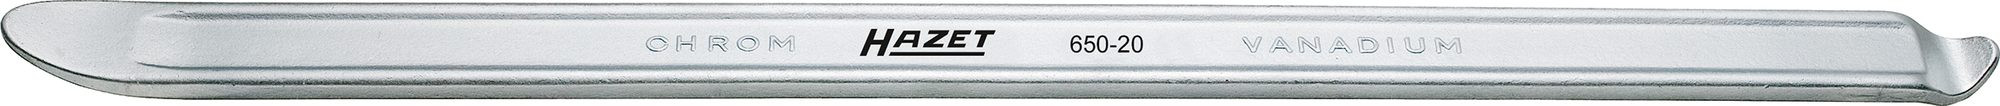 HAZET Dækjern 500 mm (650-20)